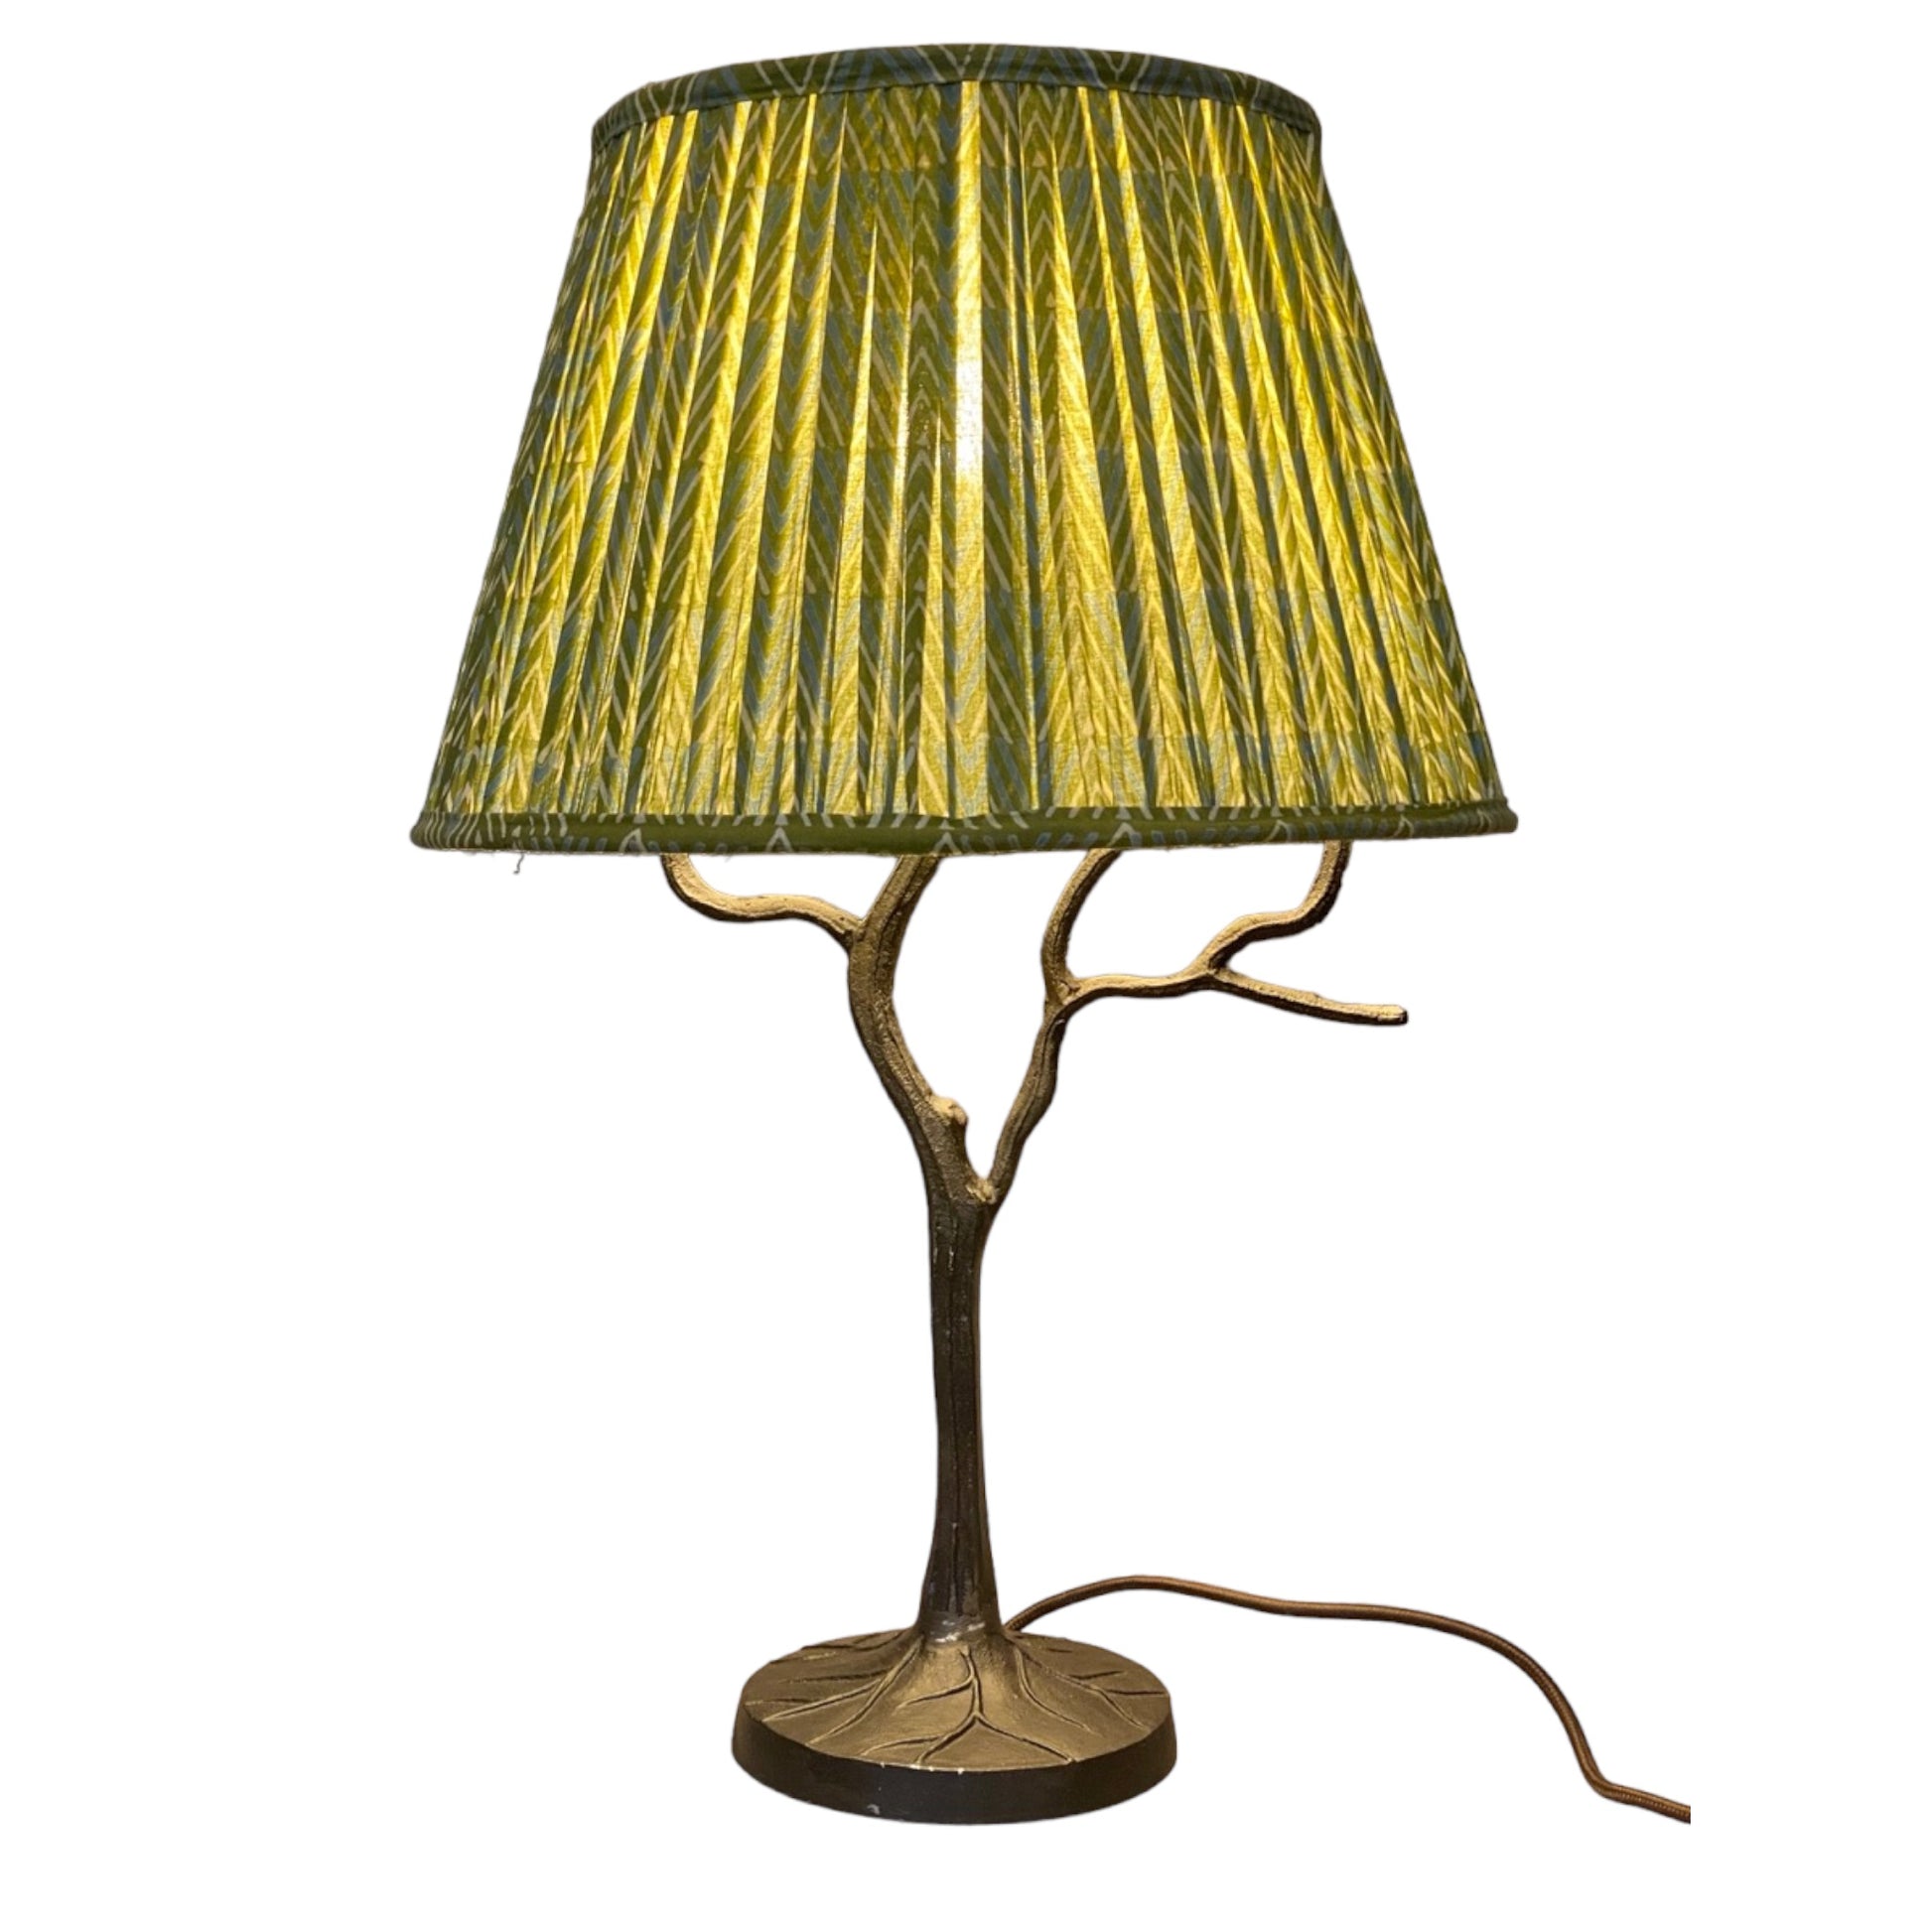 Adita tree lamp lit